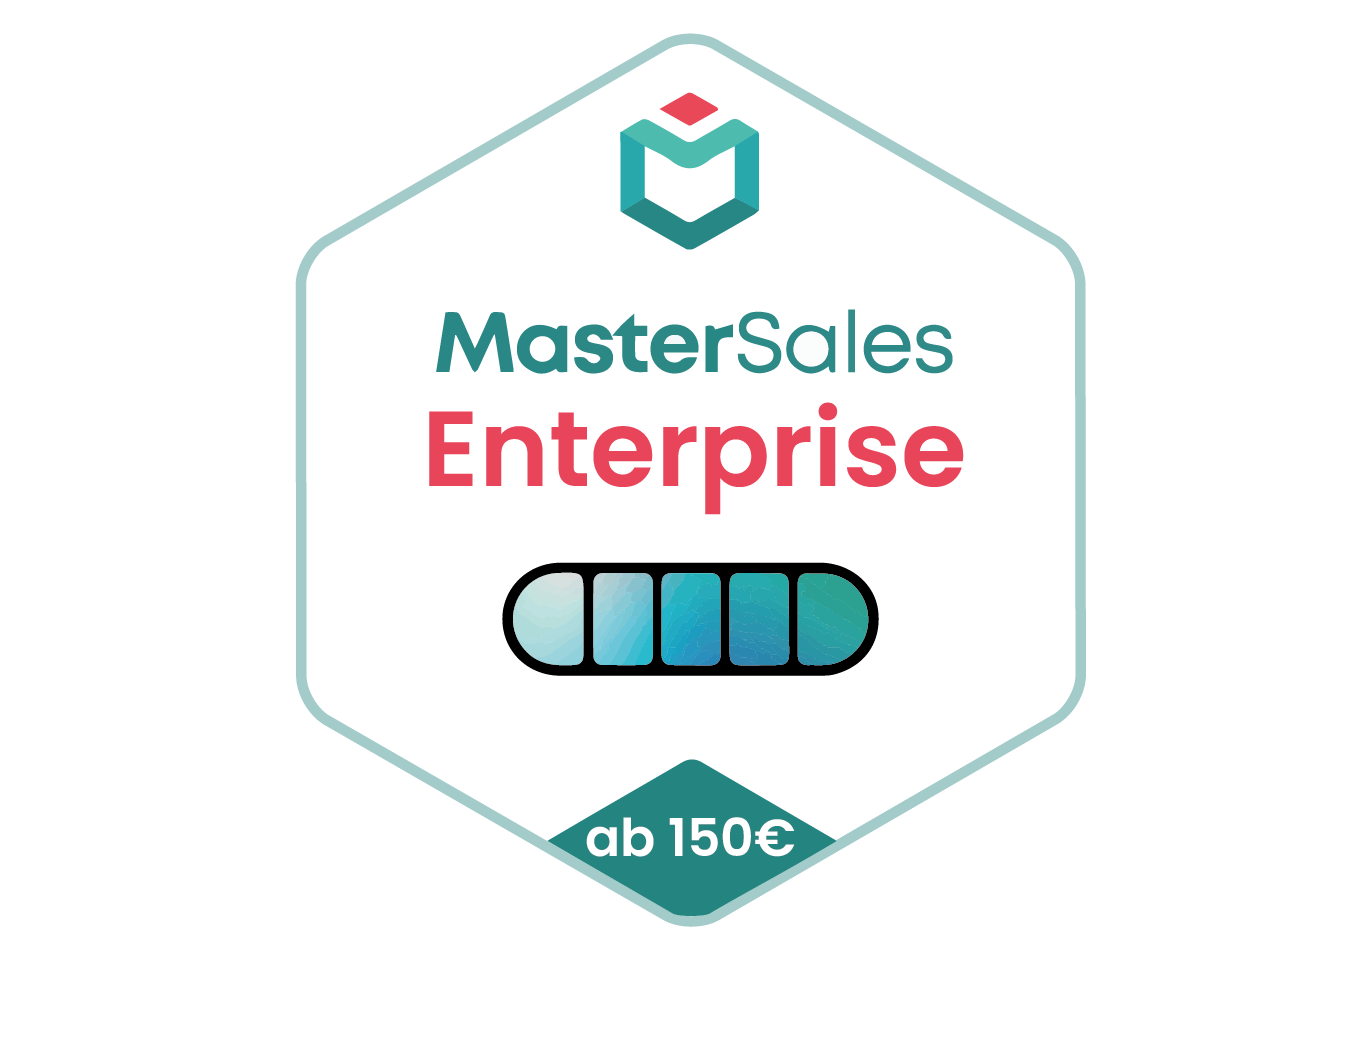 MasterSales Enterprise